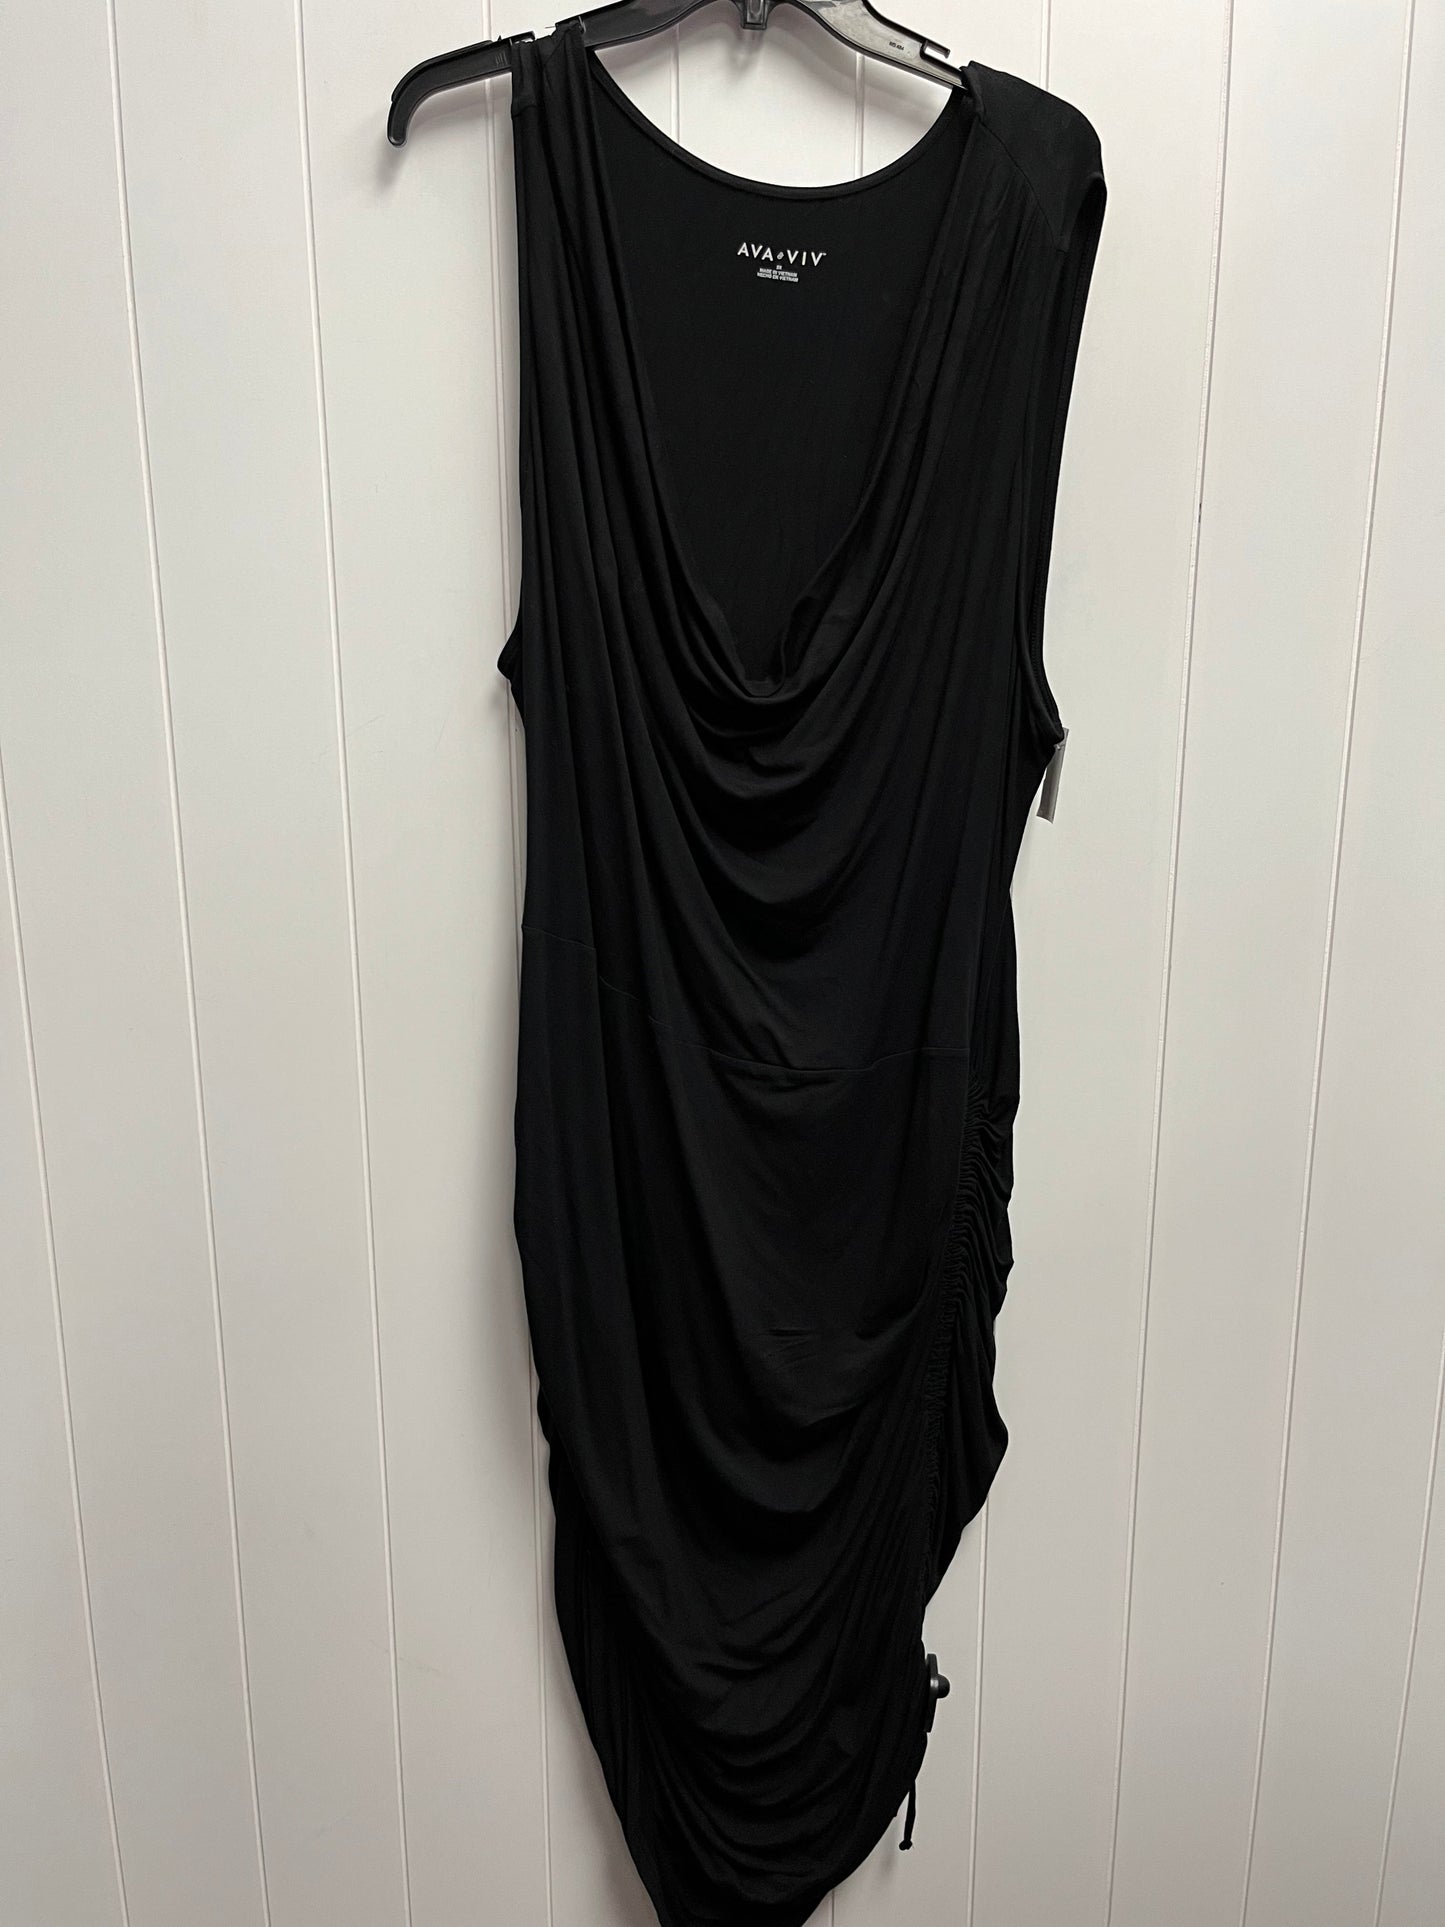 Black Dress Casual Midi Ava & Viv, Size 3x